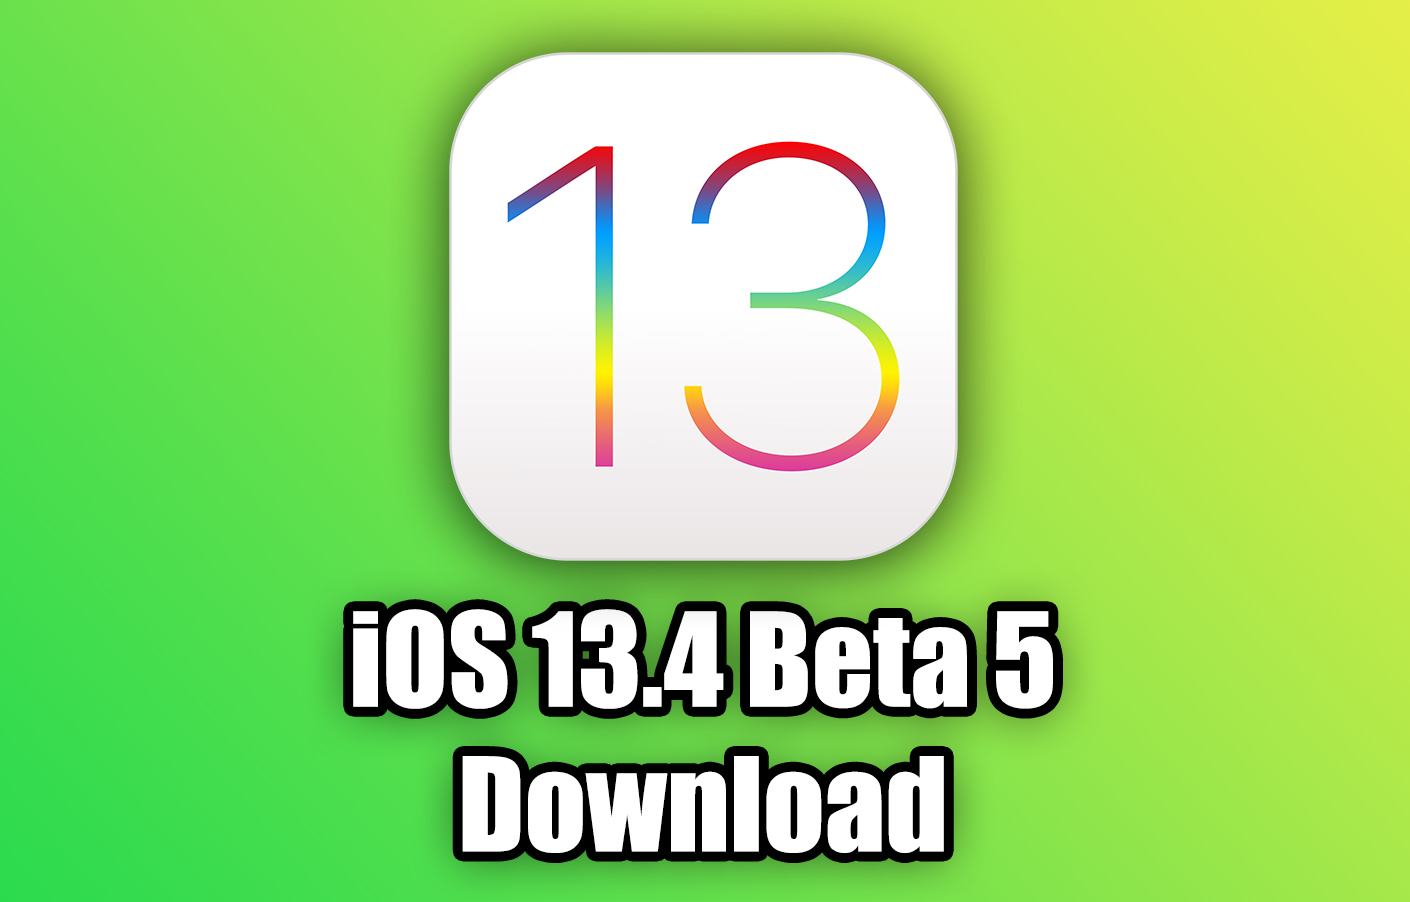 apple ios 13 download